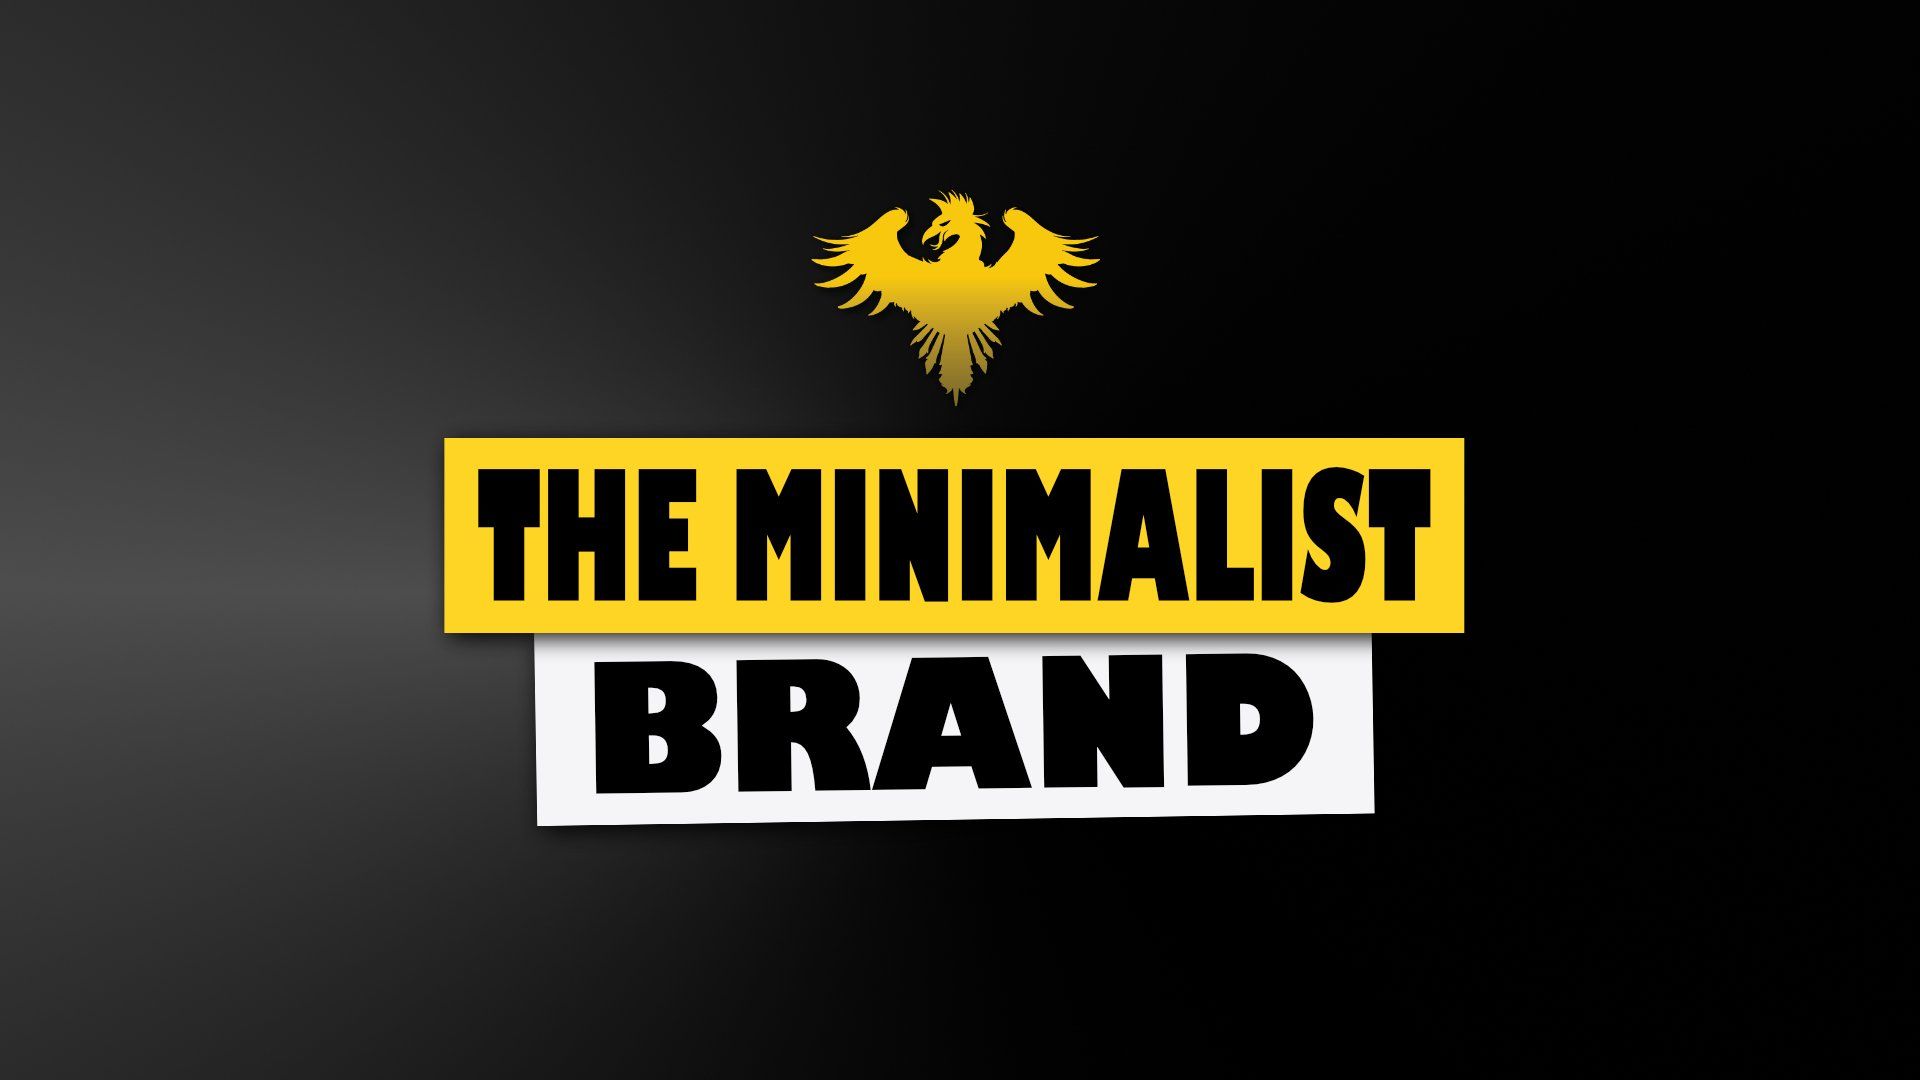 The minimalist Brand